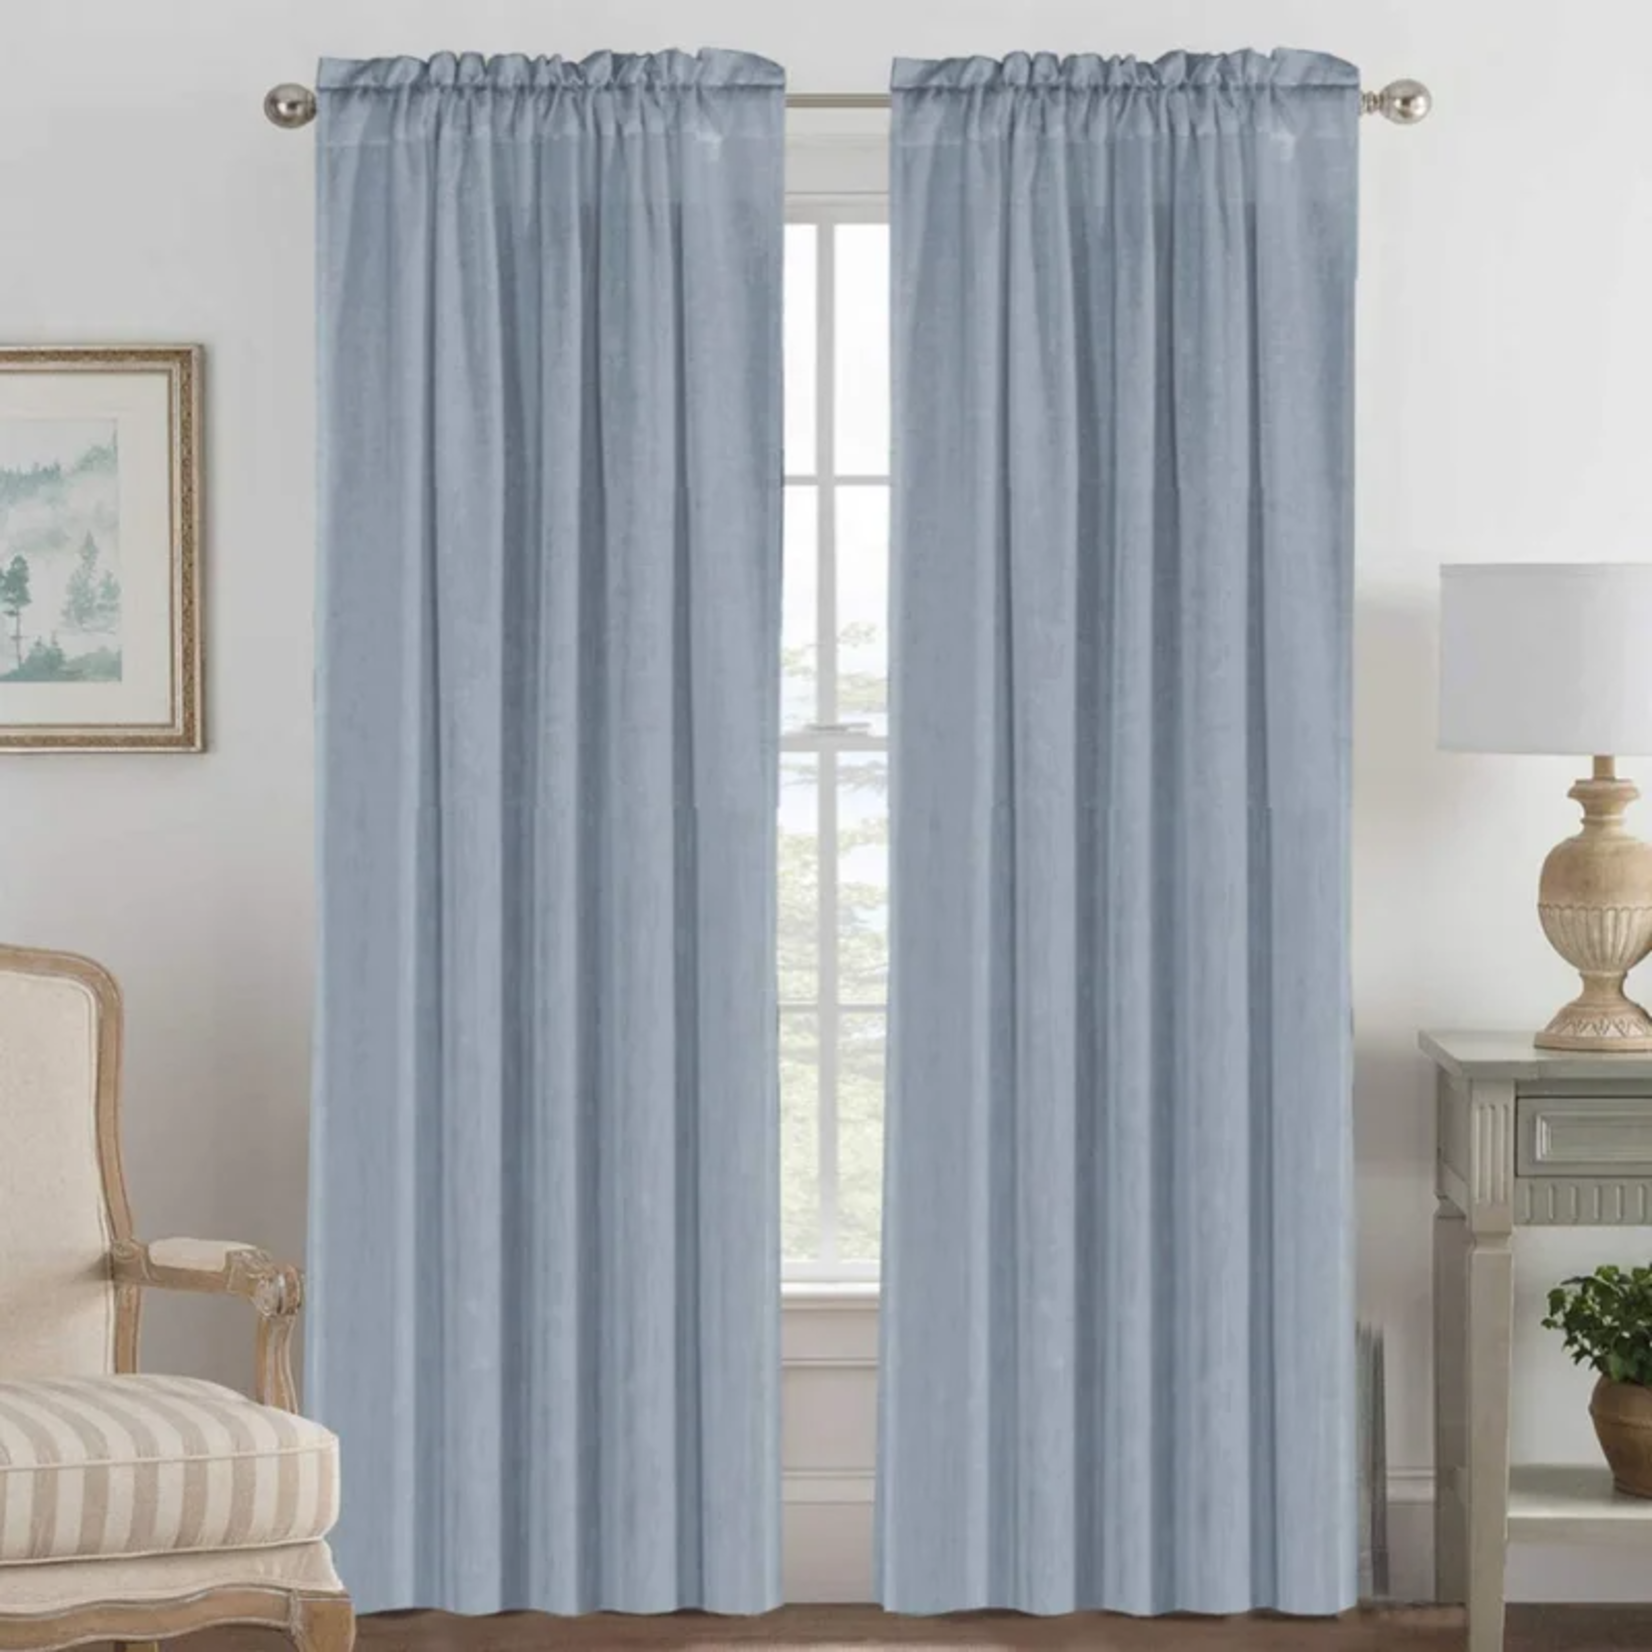 Luxury Solid Semi-Sheer Natural Linen Rod Pocket Curtain Panels 52"x84" (Set of 2)**